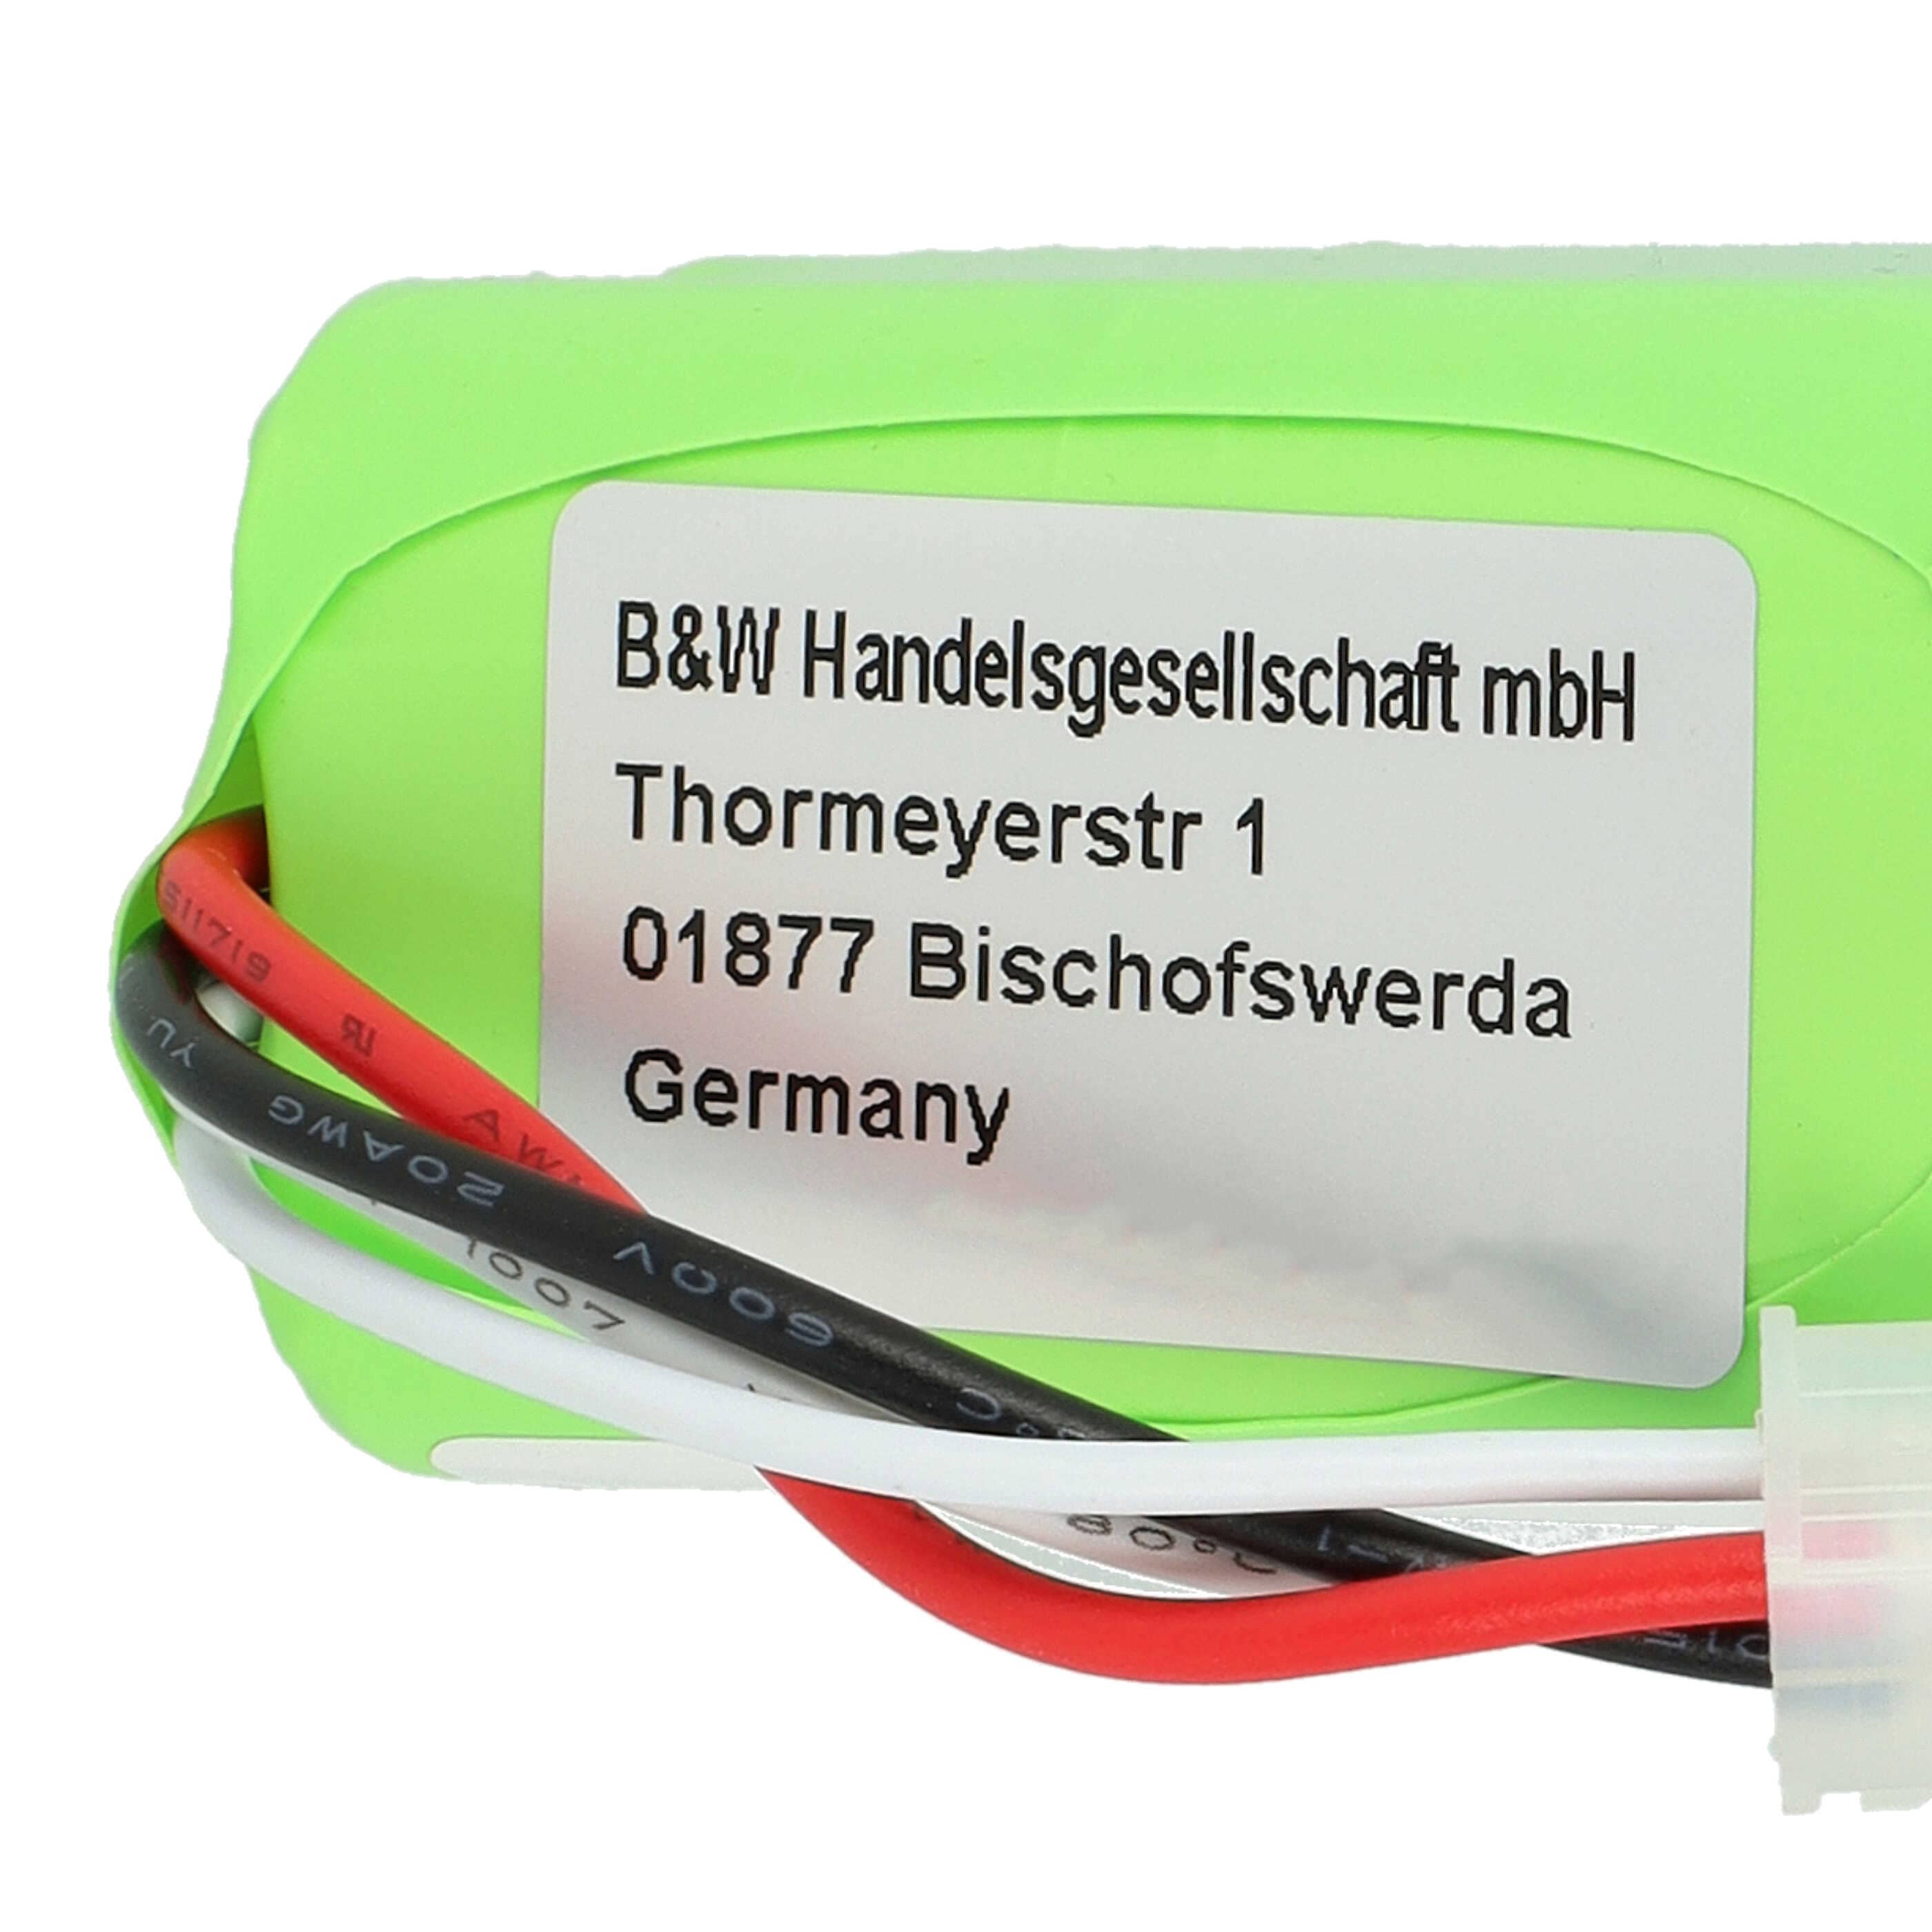 Lawnmower Battery Pack Replacement for Husqvarna 580 68 33-01, 580683301, 5806833-01 - 5000mAh 18V Li-Ion